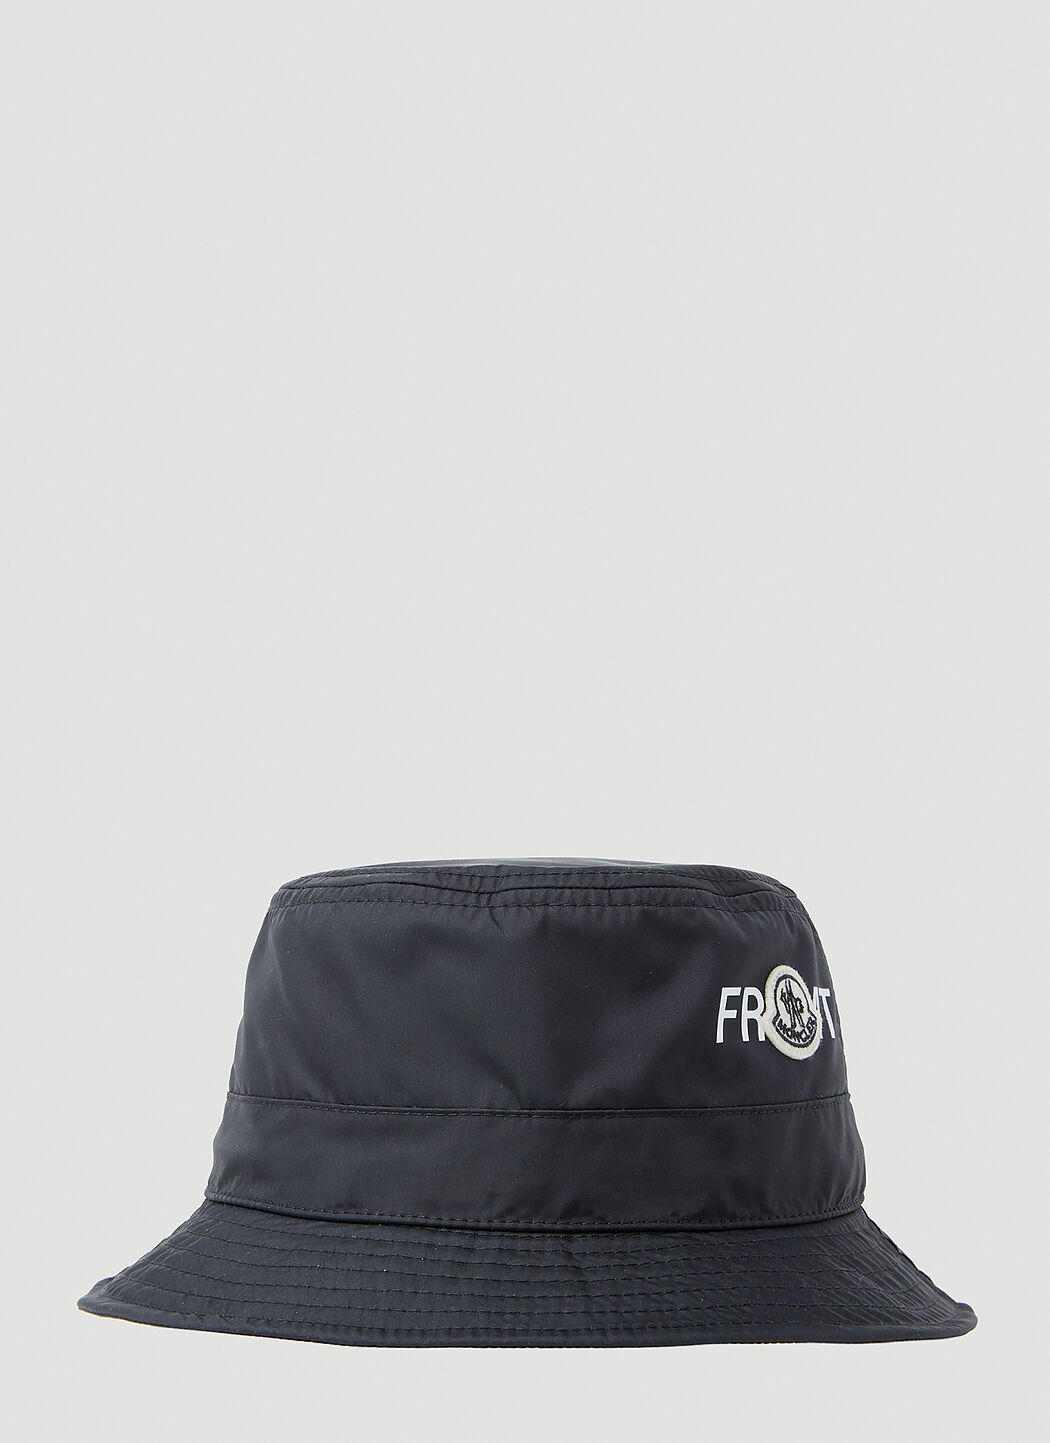 Gucci Logo Bucket Hat Black guc0255176